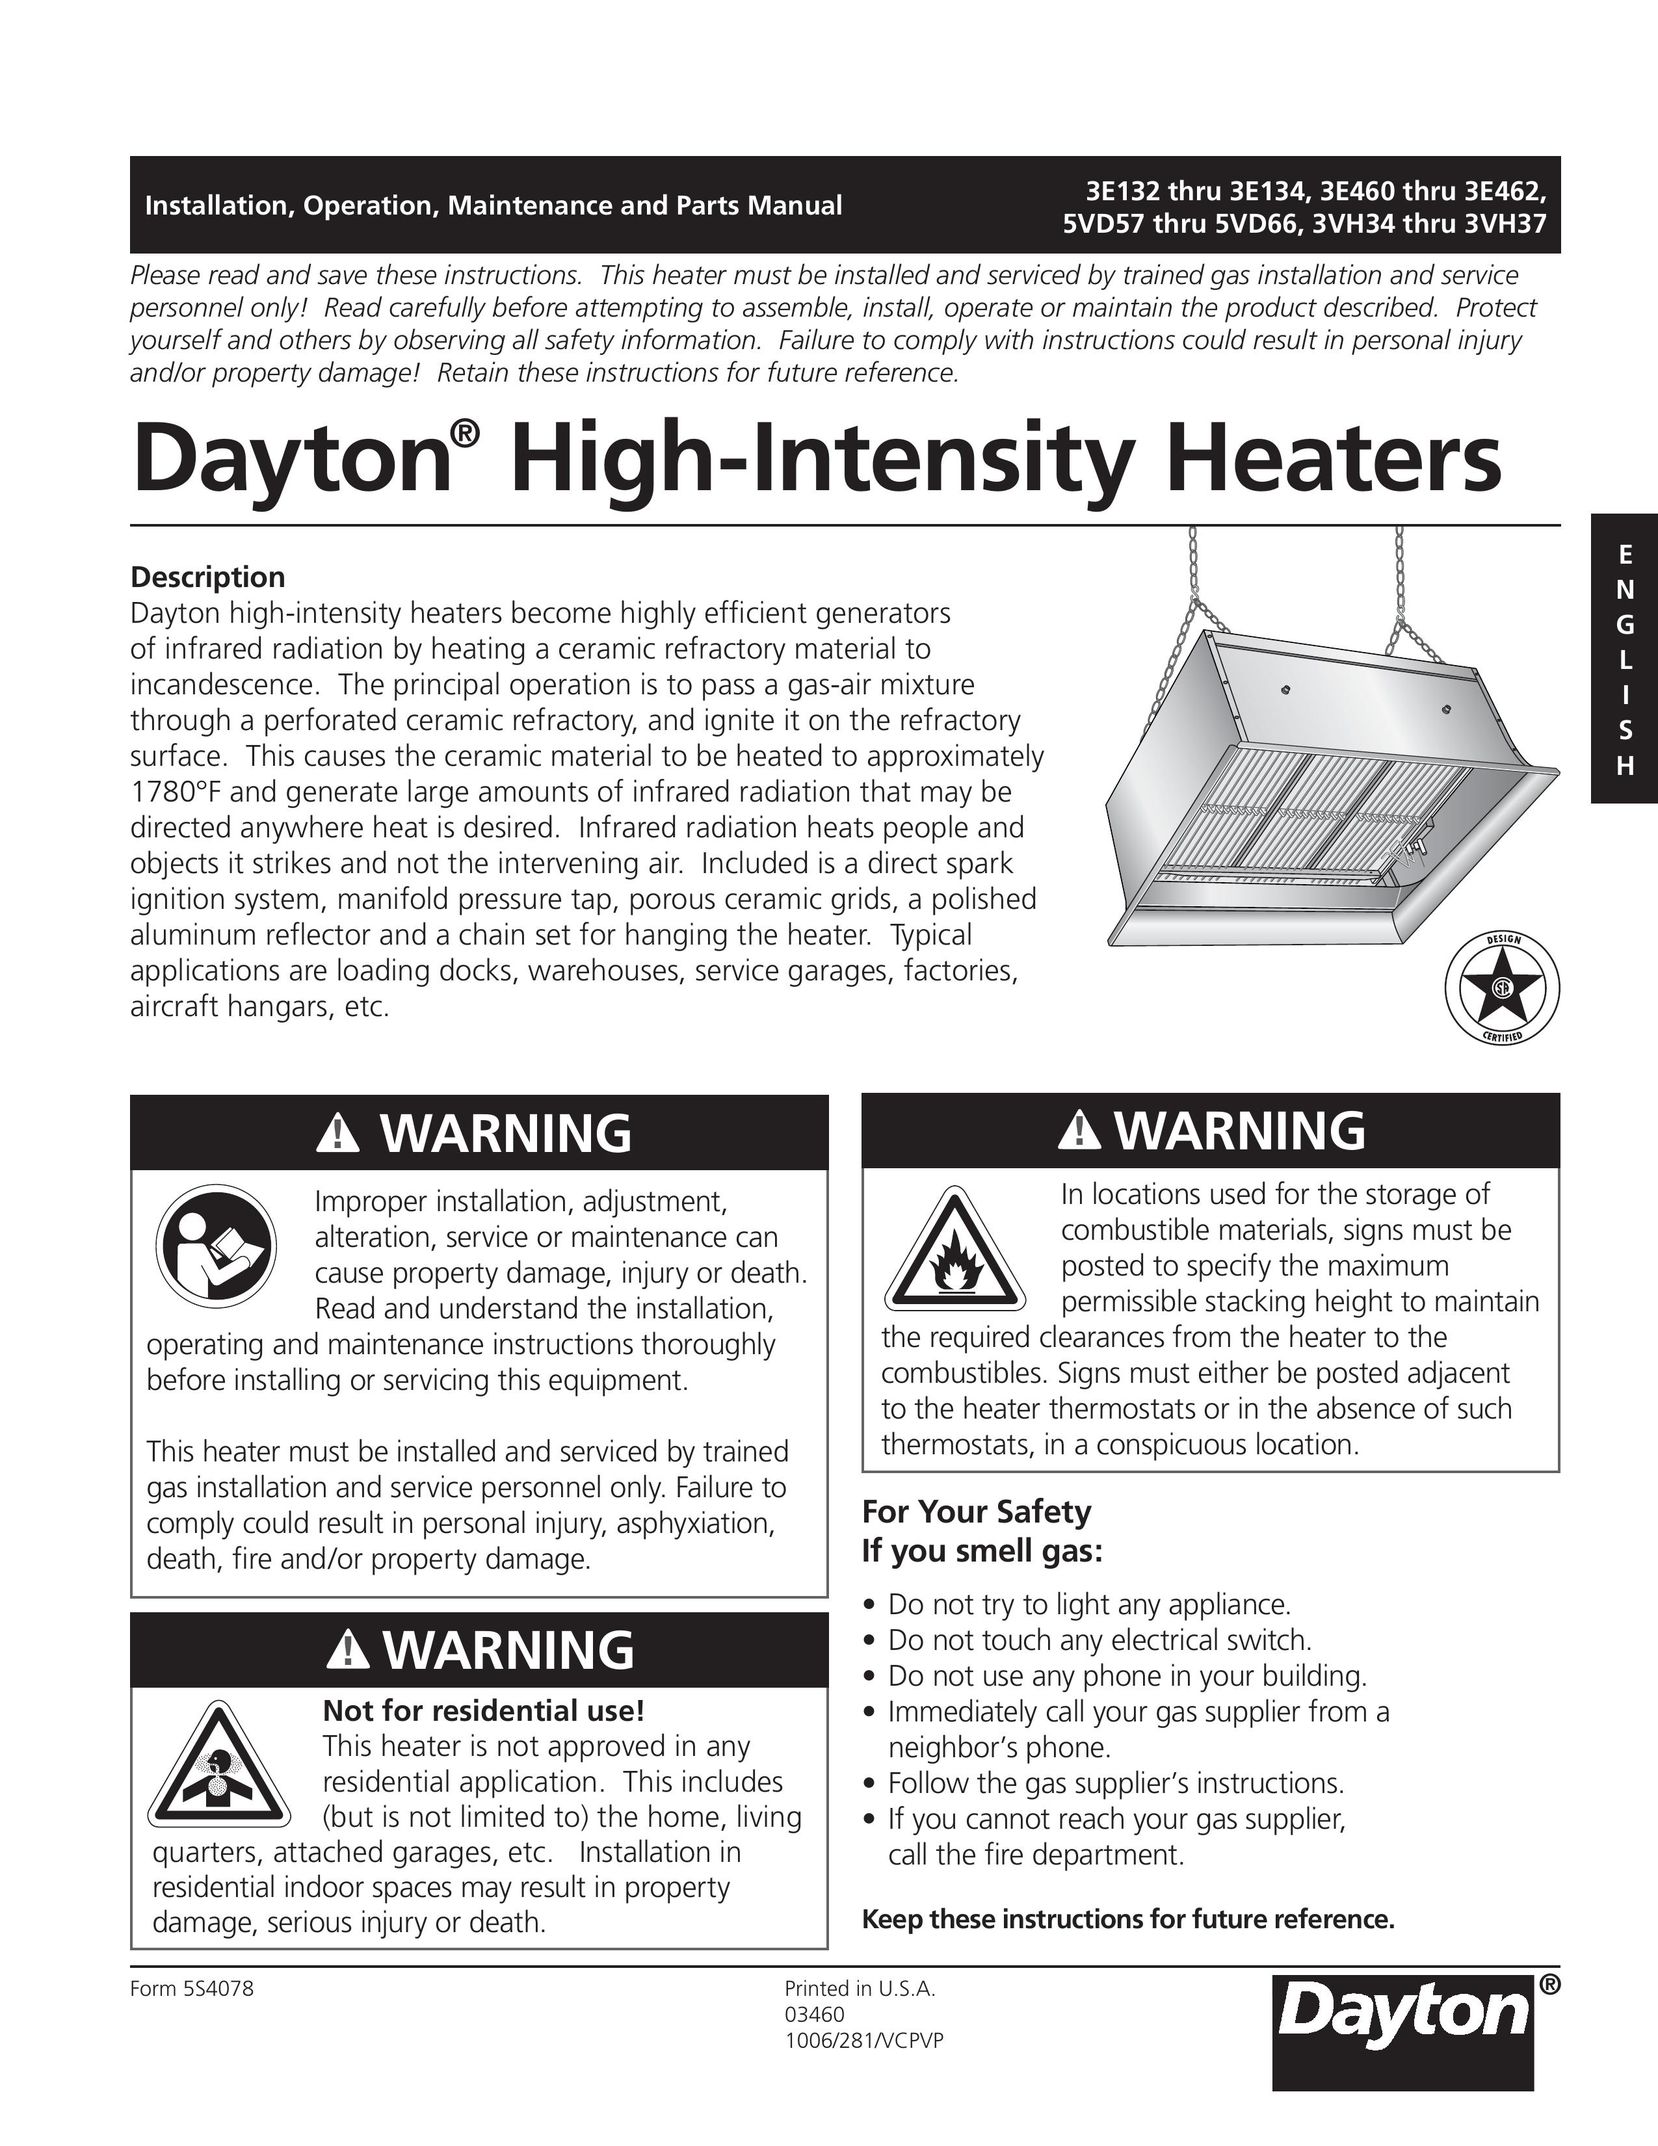 Dayton 3E460 Fan User Manual